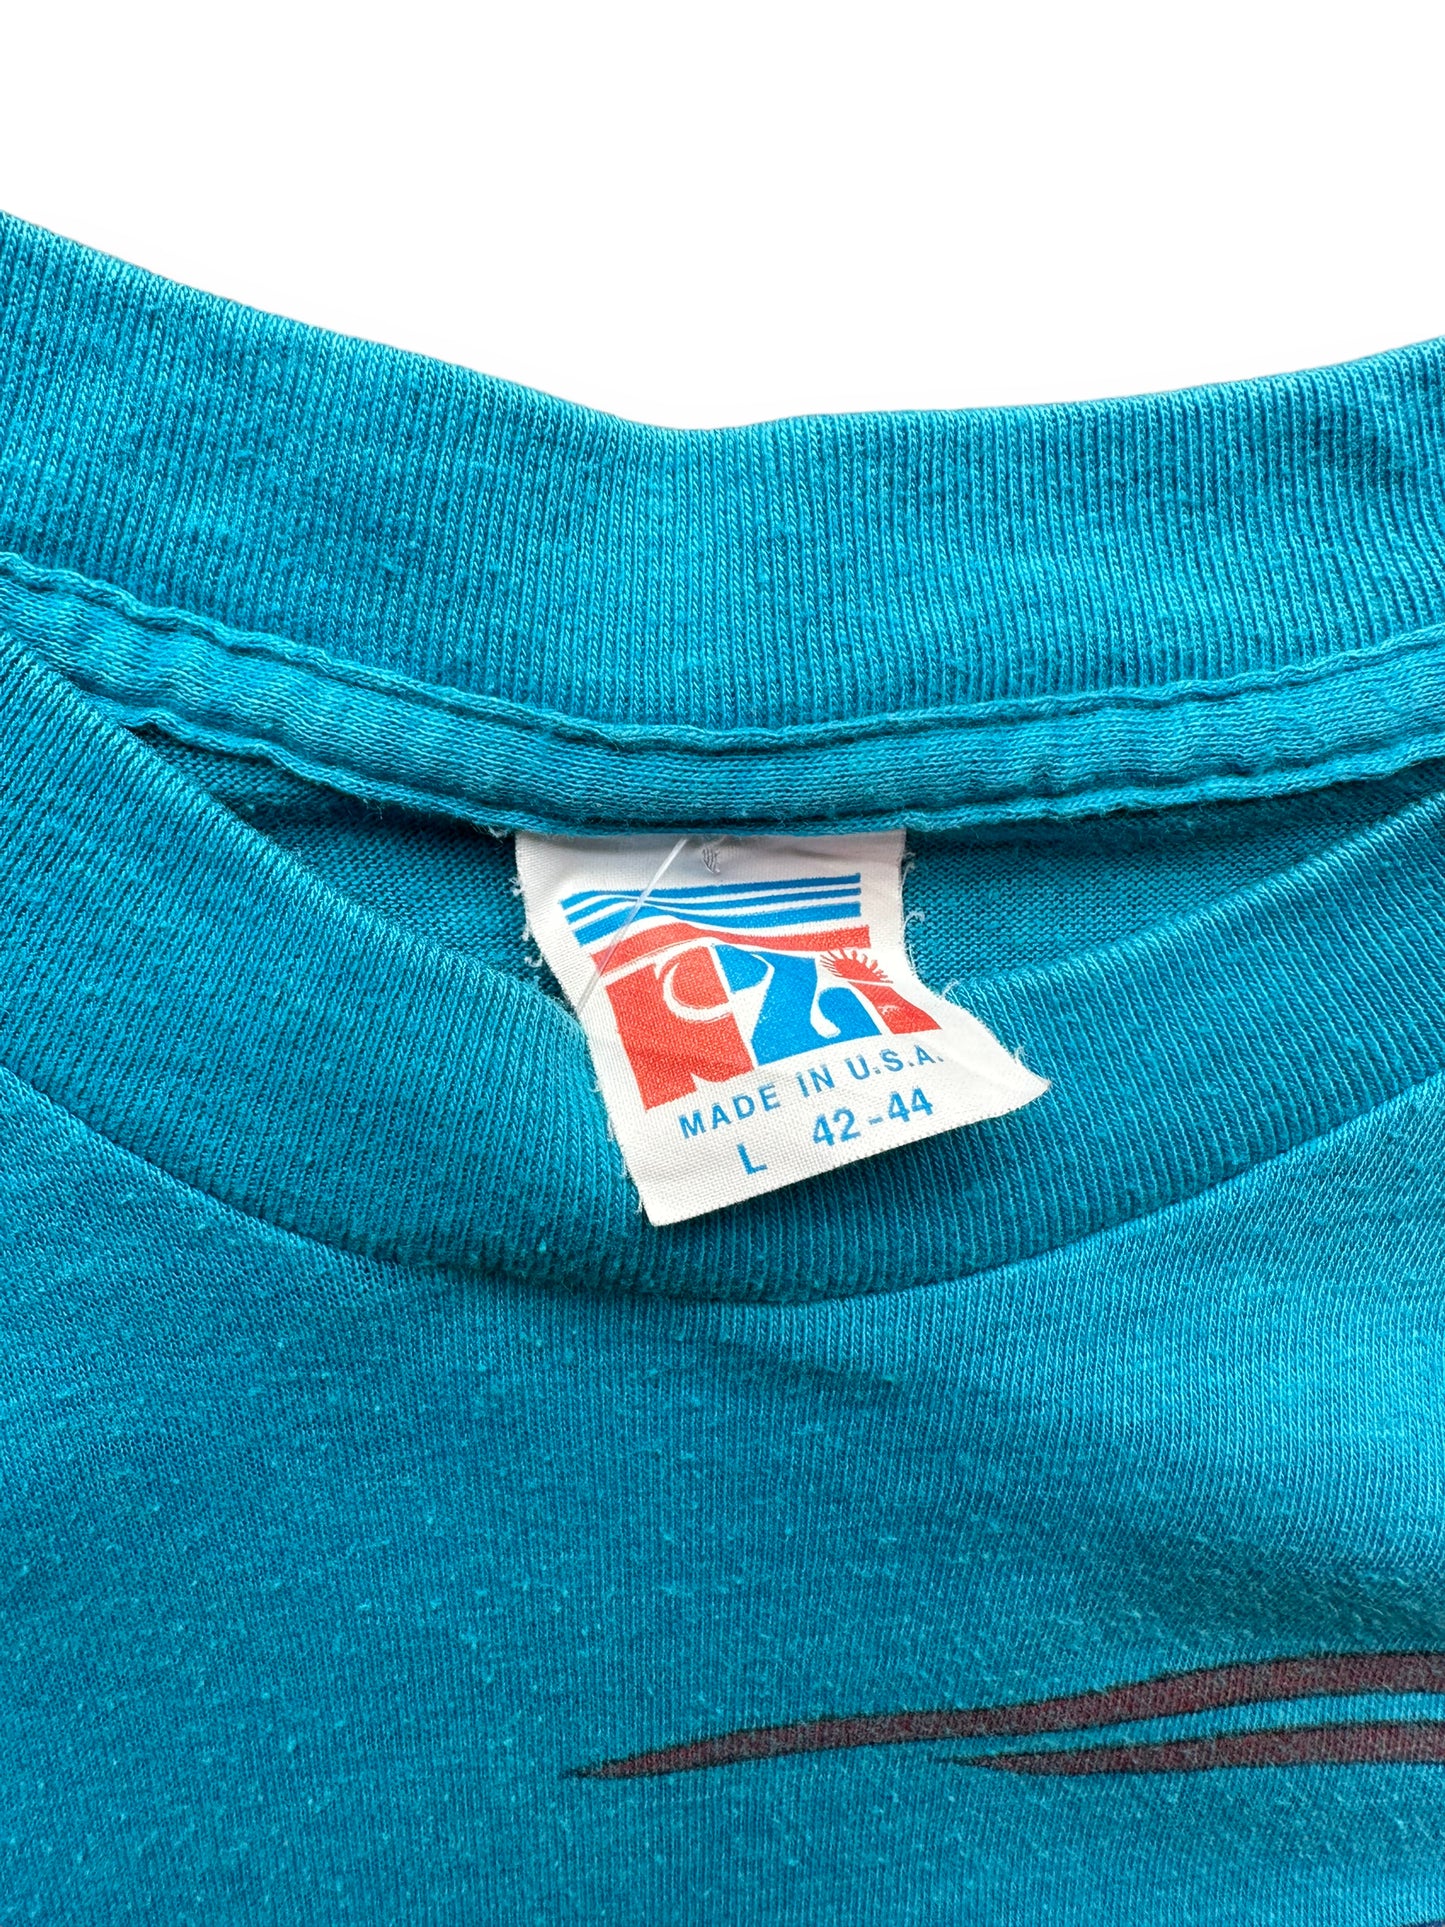 Tag detail shot of Vintage Blue Wind Surfing Tee SZ L | Vintage T-Shirts Seattle | Barn Owl Vintage Tees Seattle